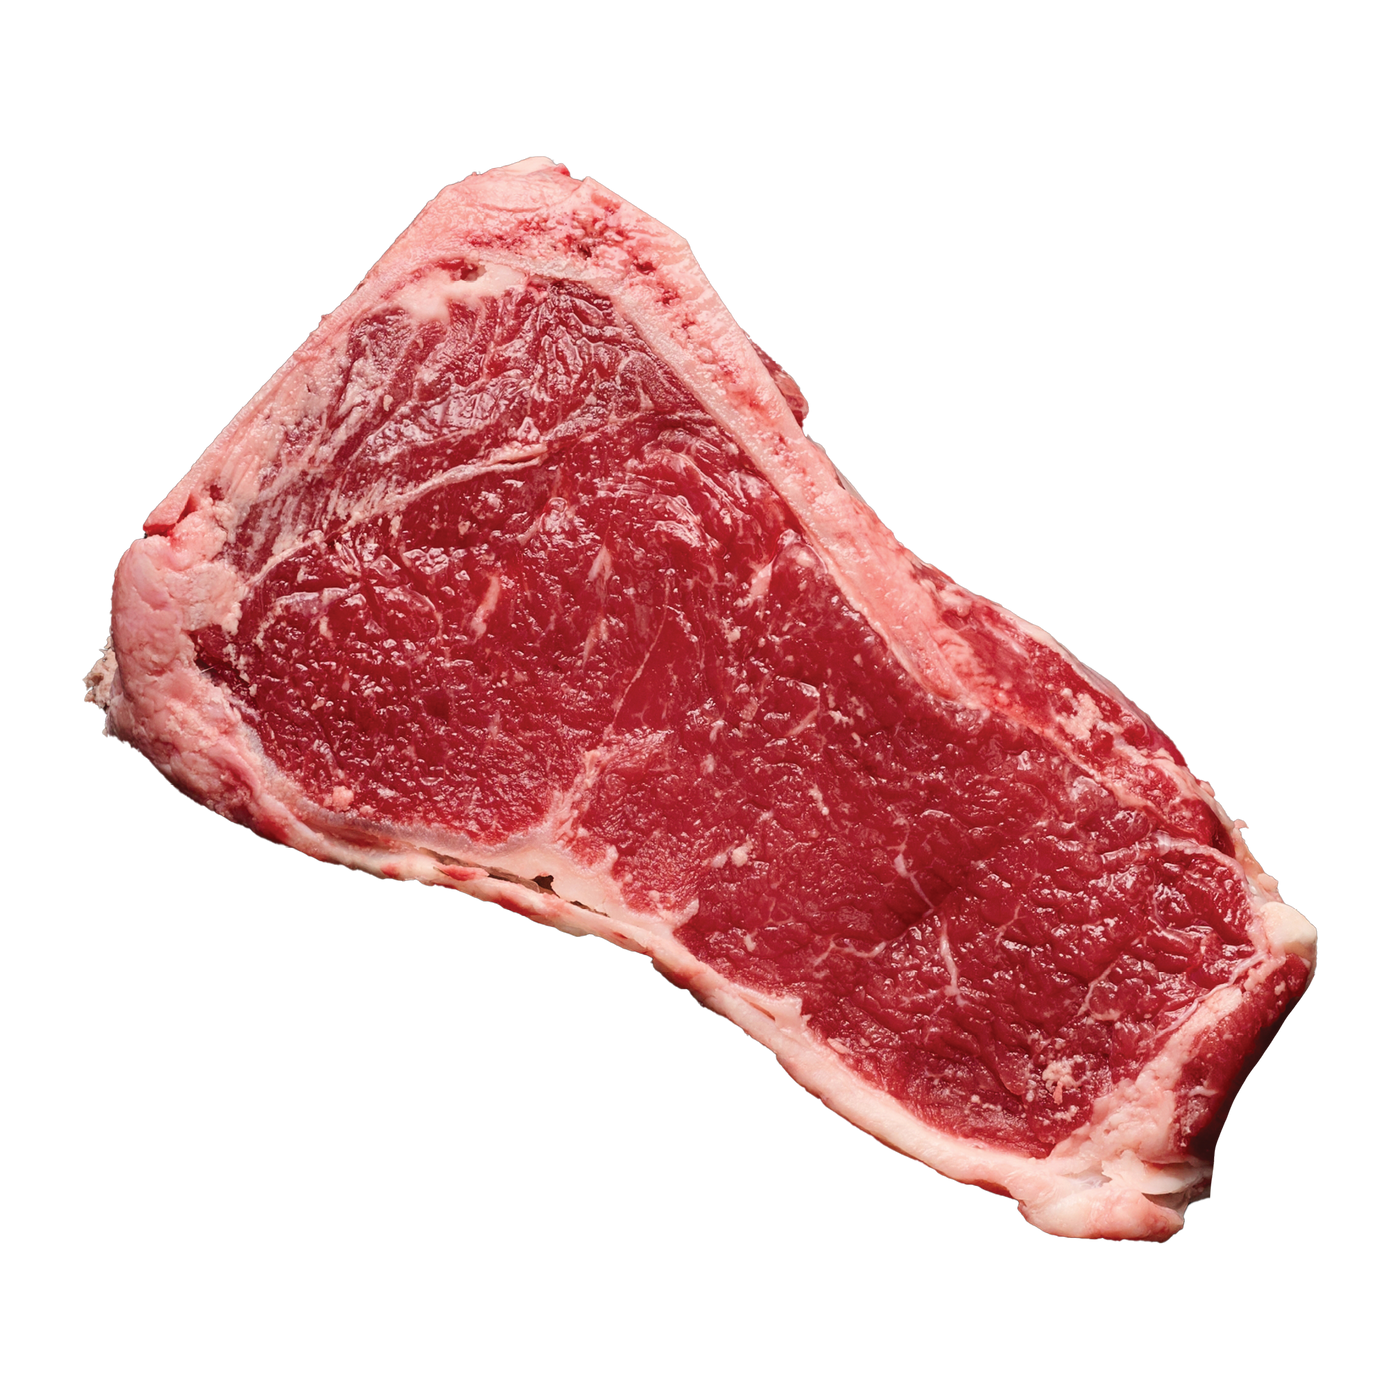 Fresh Bone-In Strip Loin Steak